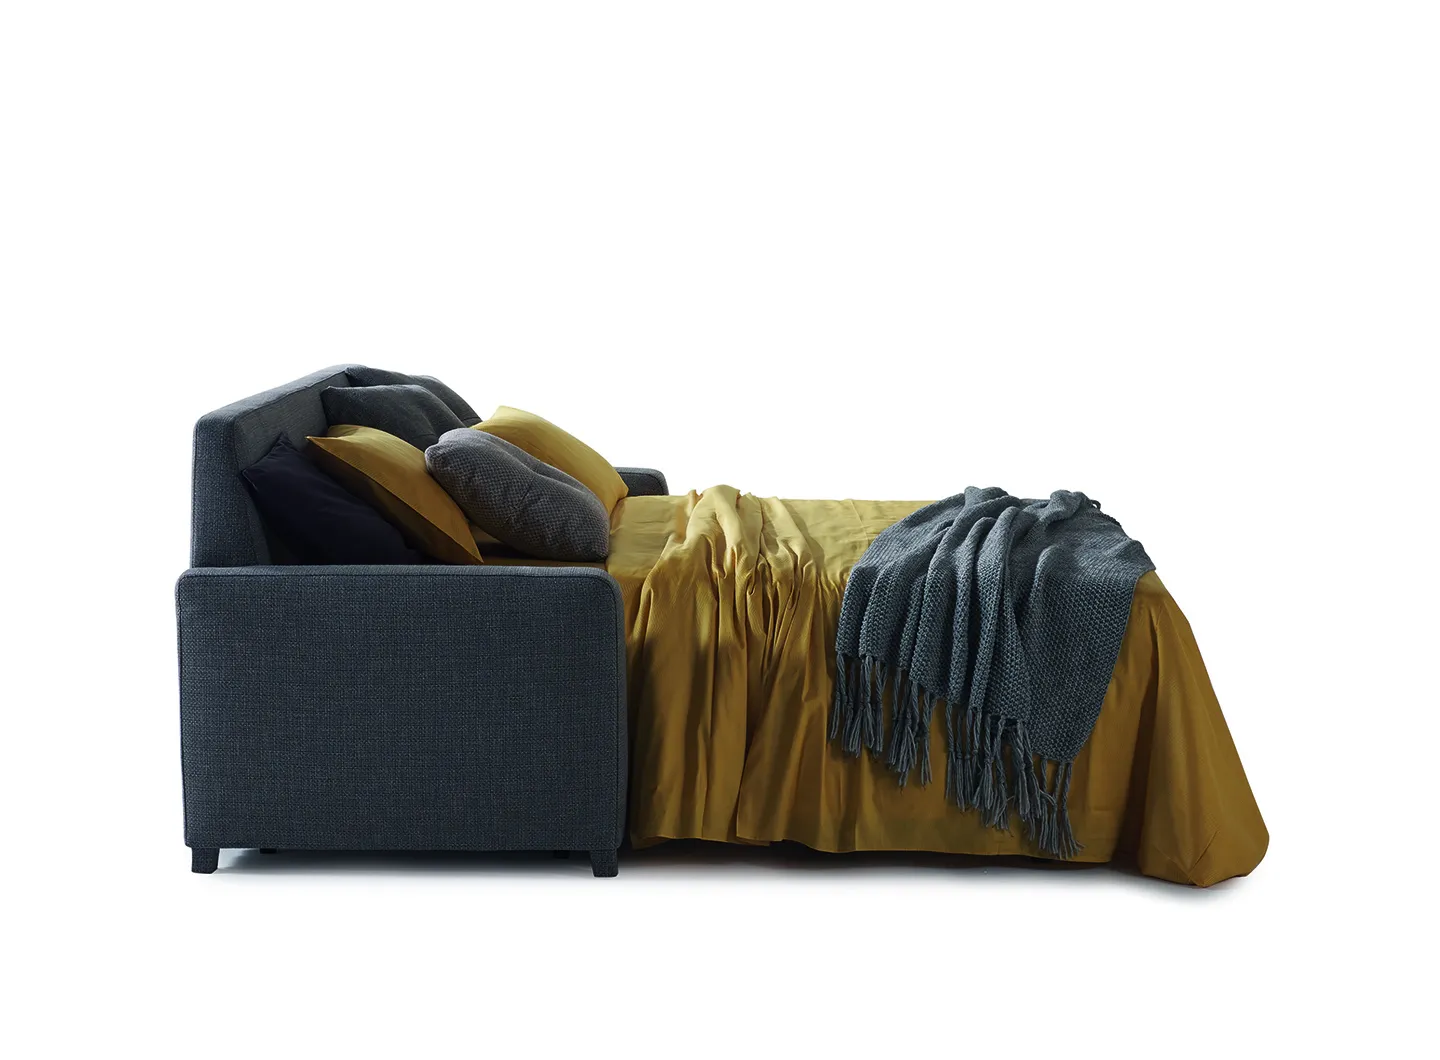 Milano Bedding - Oliver sofa bed